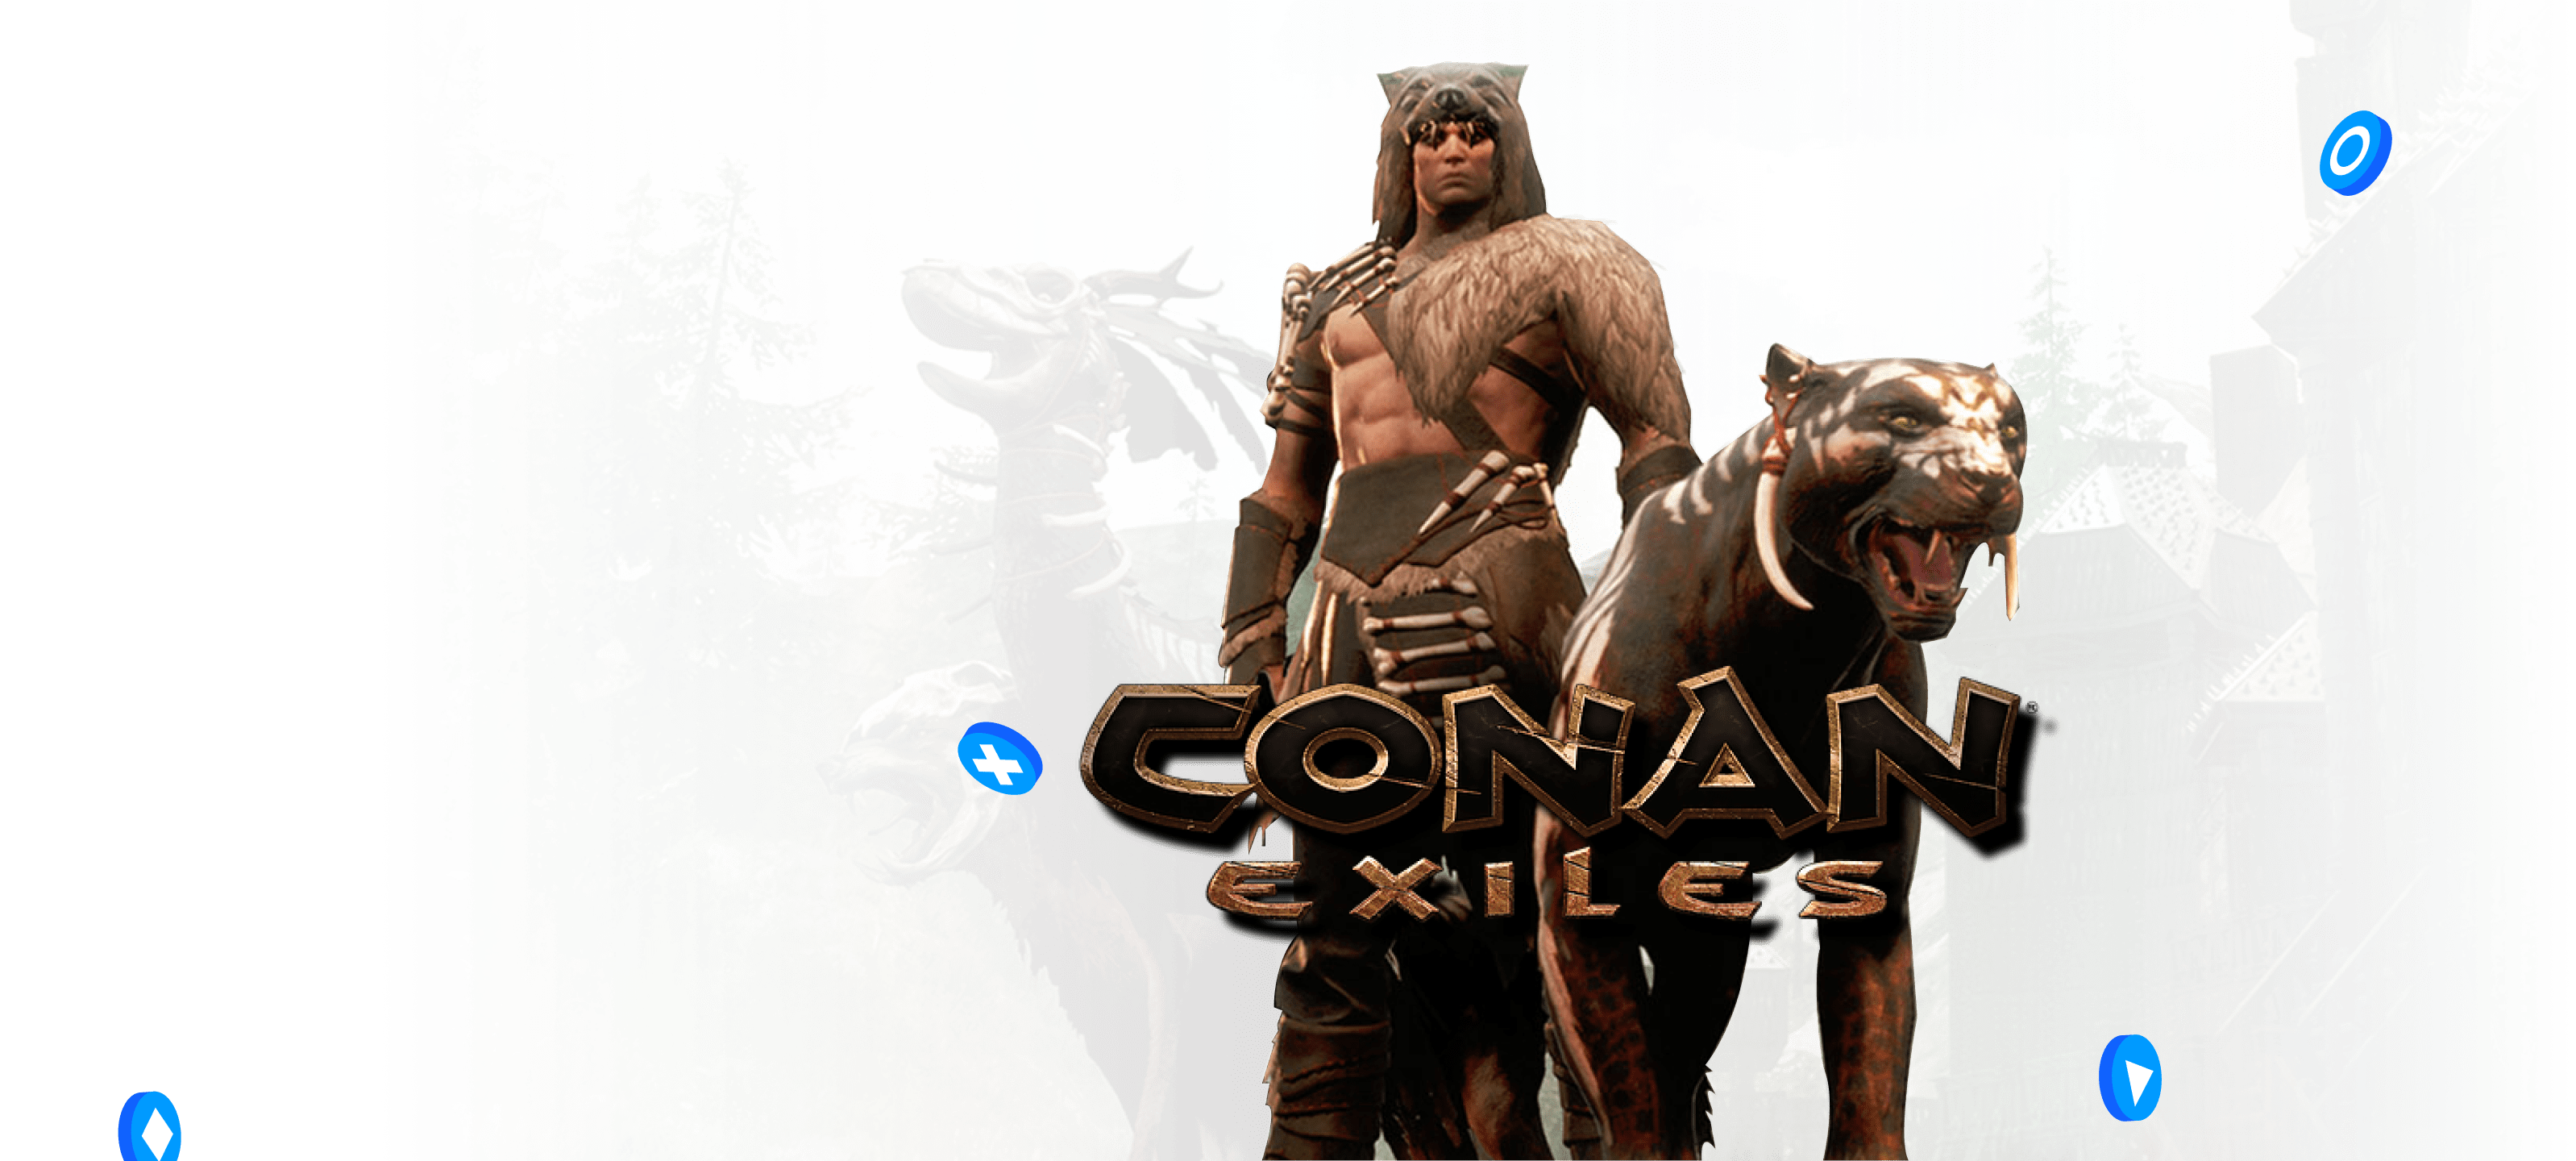 Conan Exiles - Game Server - Premium Conan Exiles game server hosting